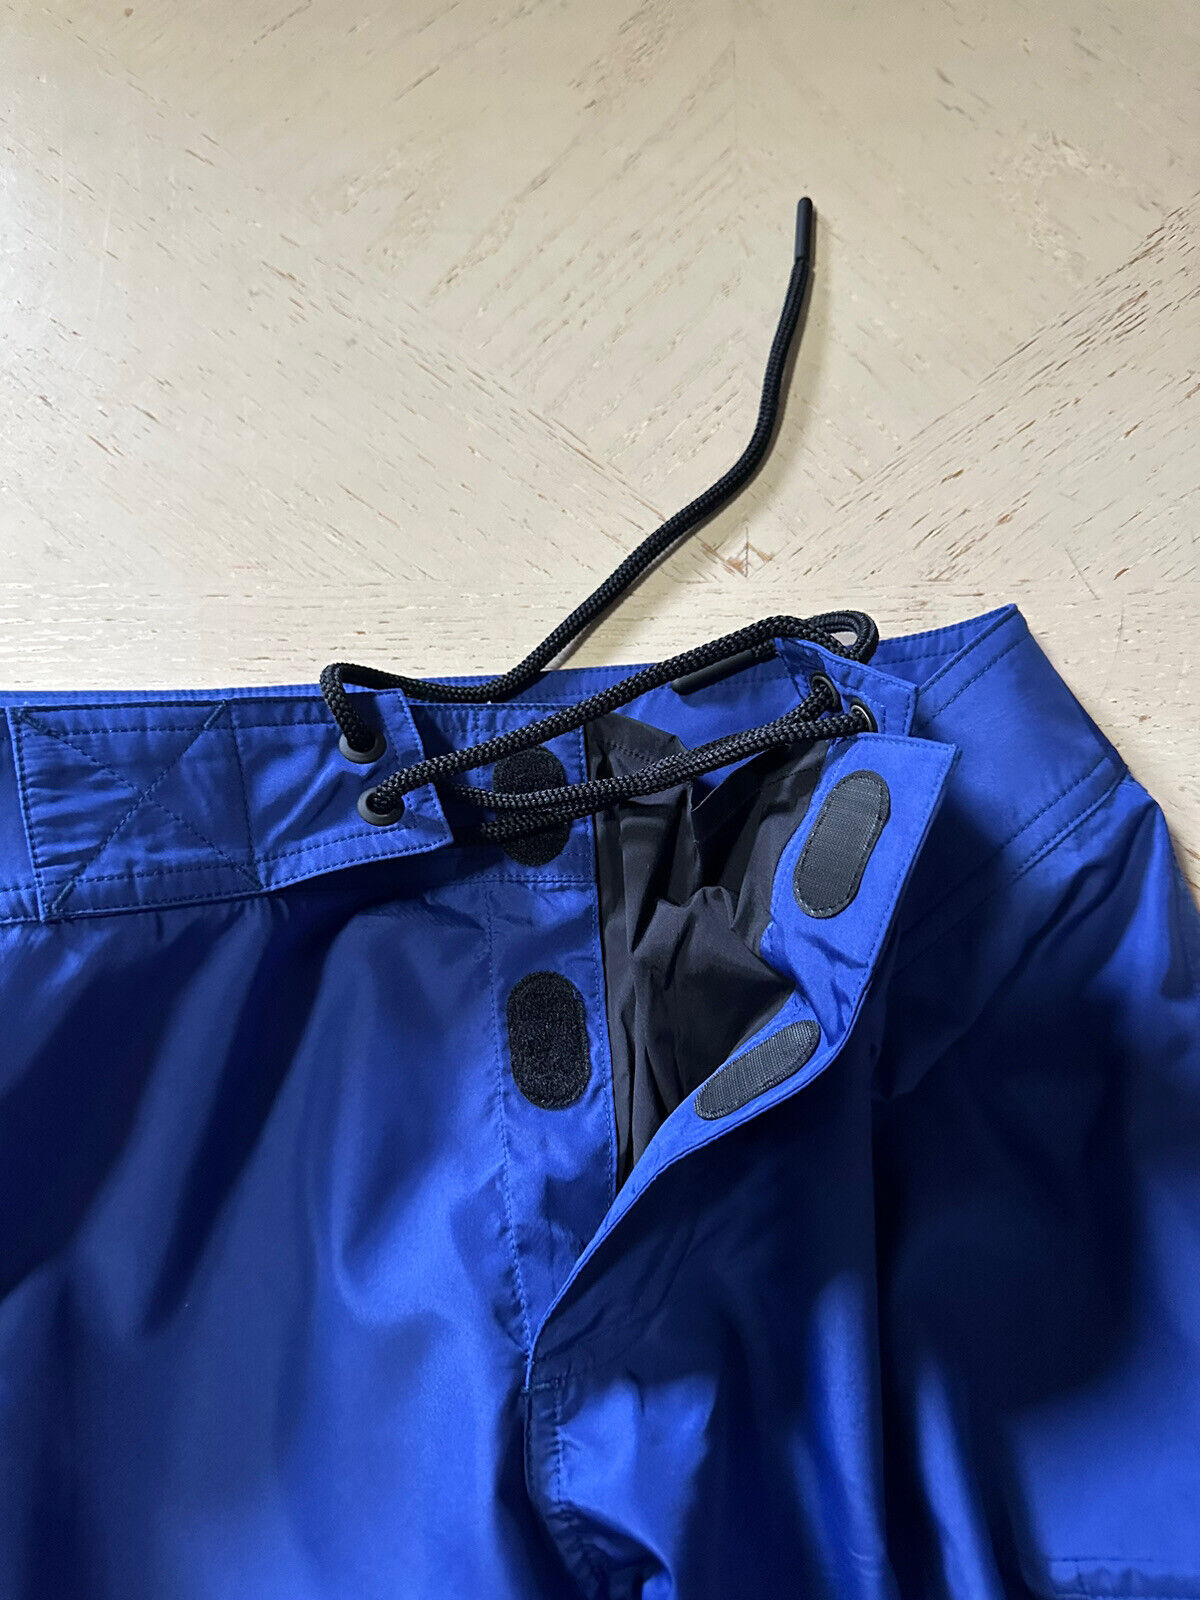 NWT $790 Шорты для плавания DIOR на шнурке, синие, размер S